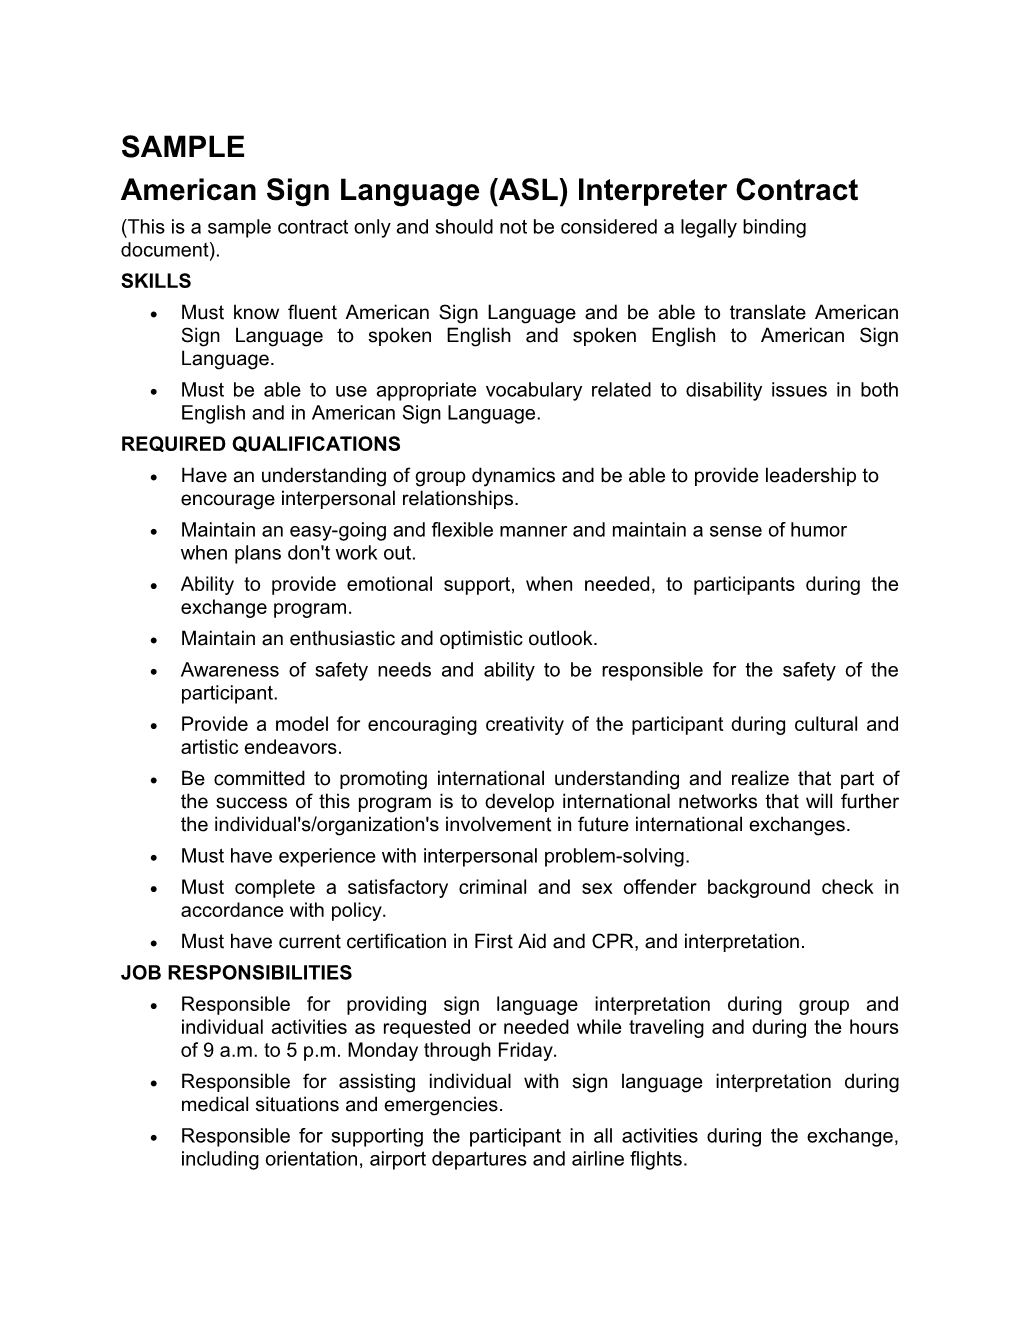 American Sign Language (ASL) Interpreter Contract